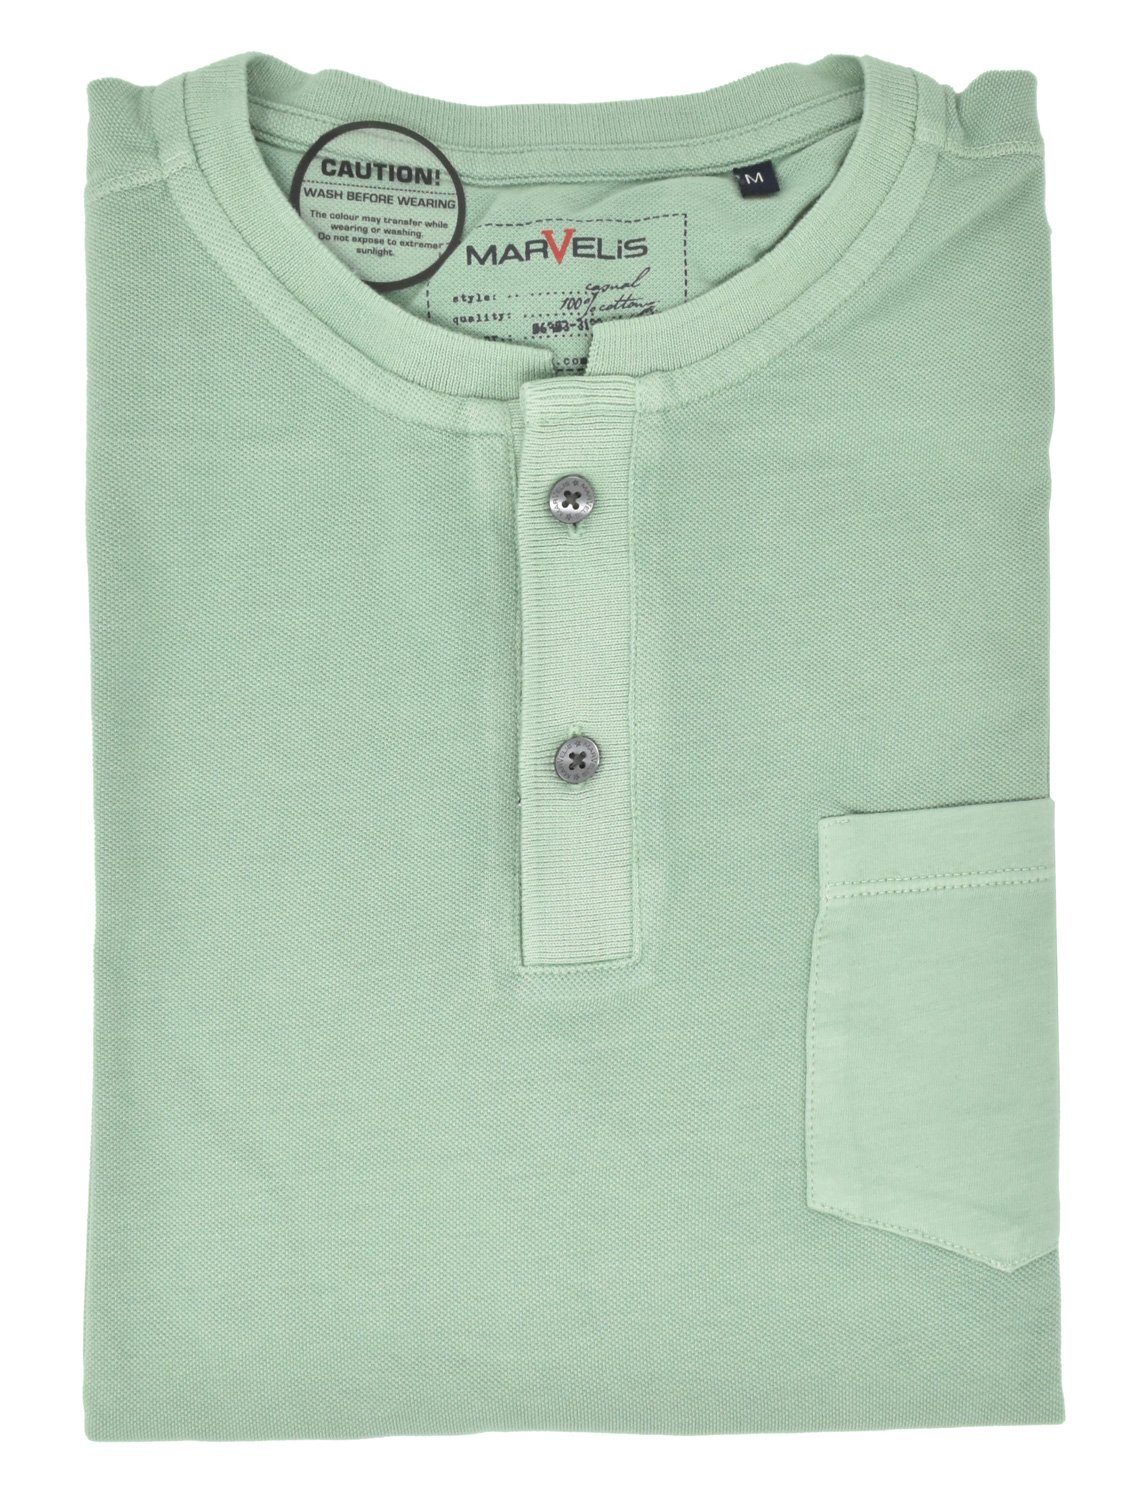 - Fit Poloshirt - Casual Einfarbig Grün MARVELIS Poloshirt - Stehkragen -